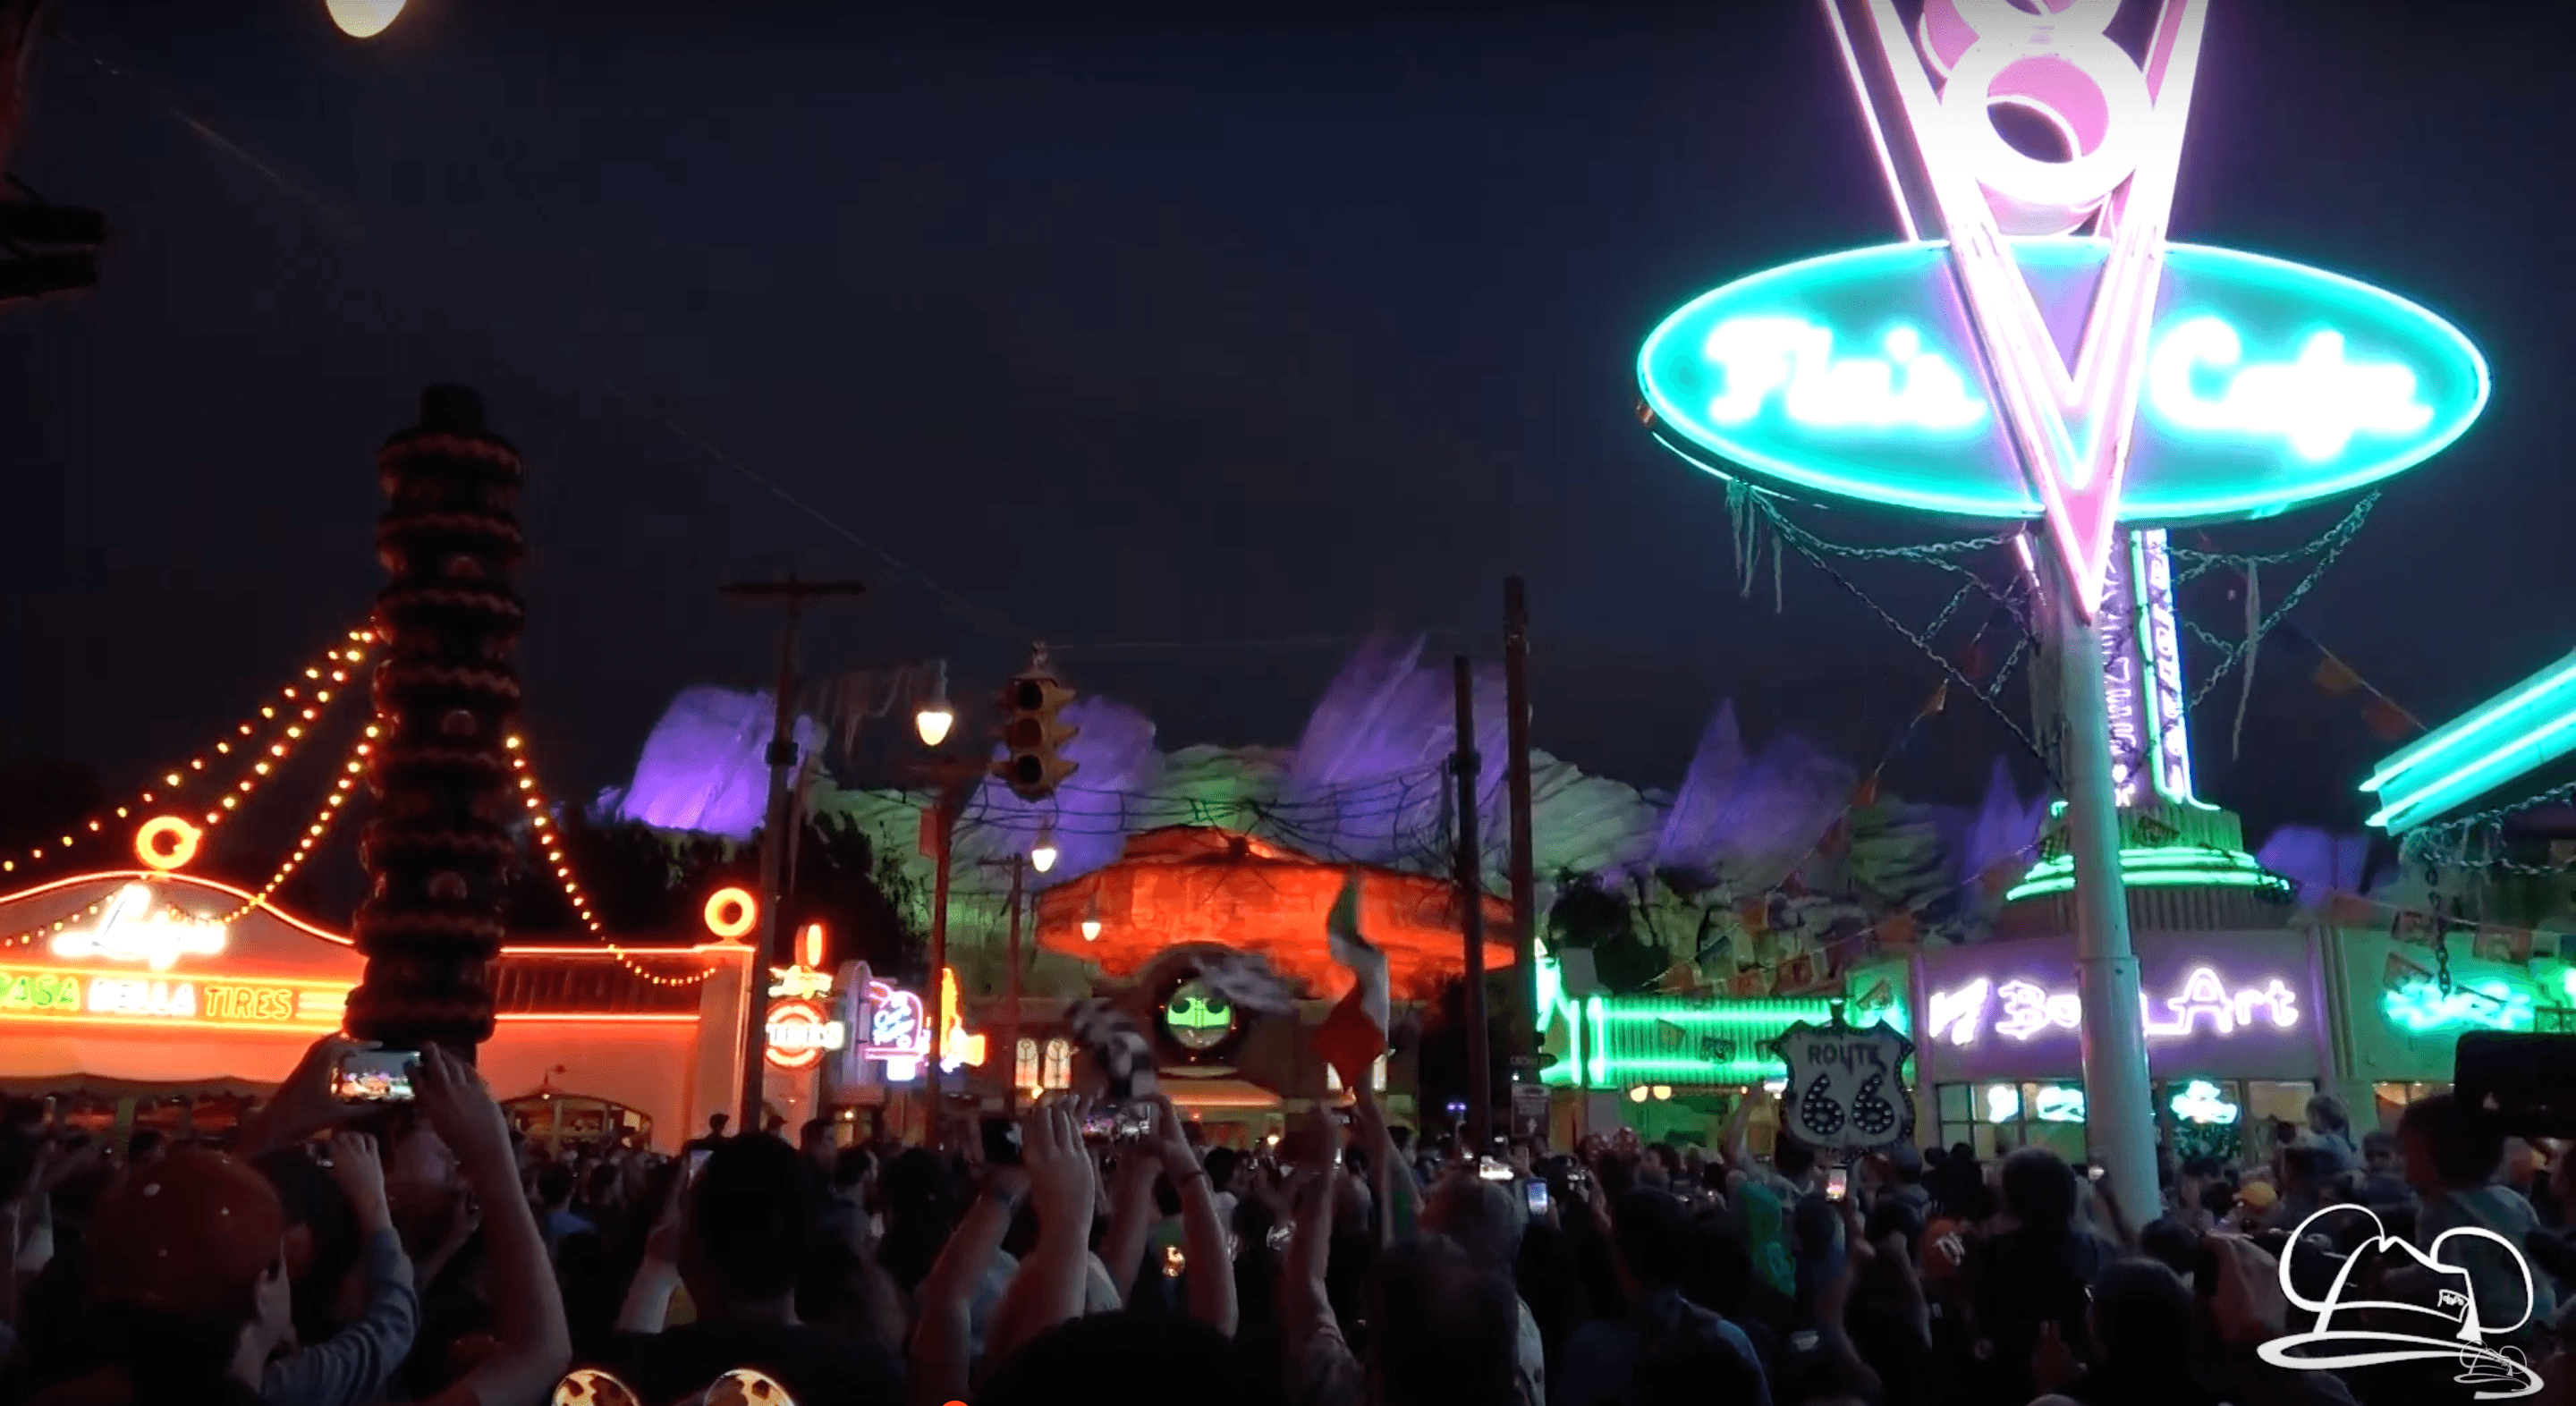 Cars Land Haul-O-Ween Lighting - Halloween Time at the Disneyland Resort